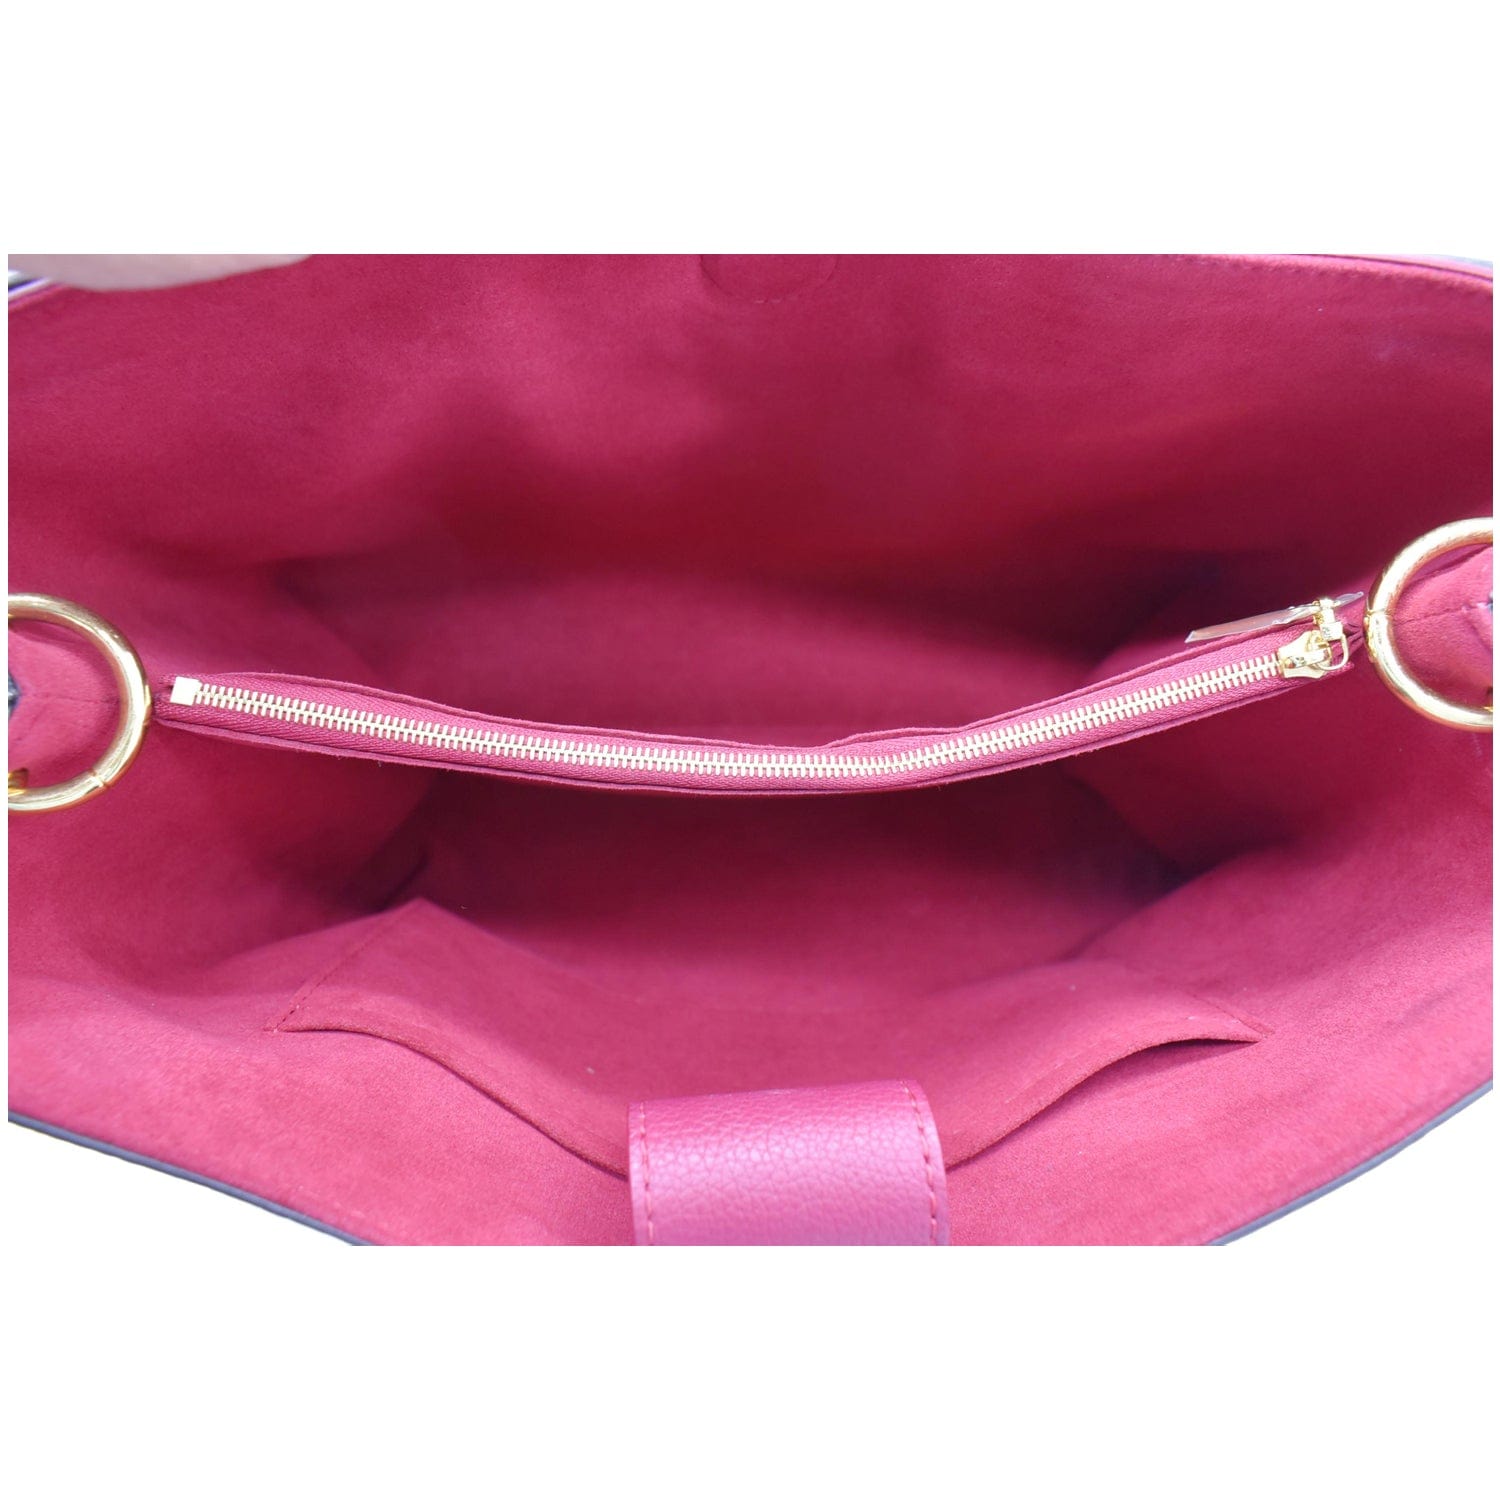 Louis Vuitton Riverside Damier Ebene Satchel Shoulder Bag Brown Black –  Gaby's Bags